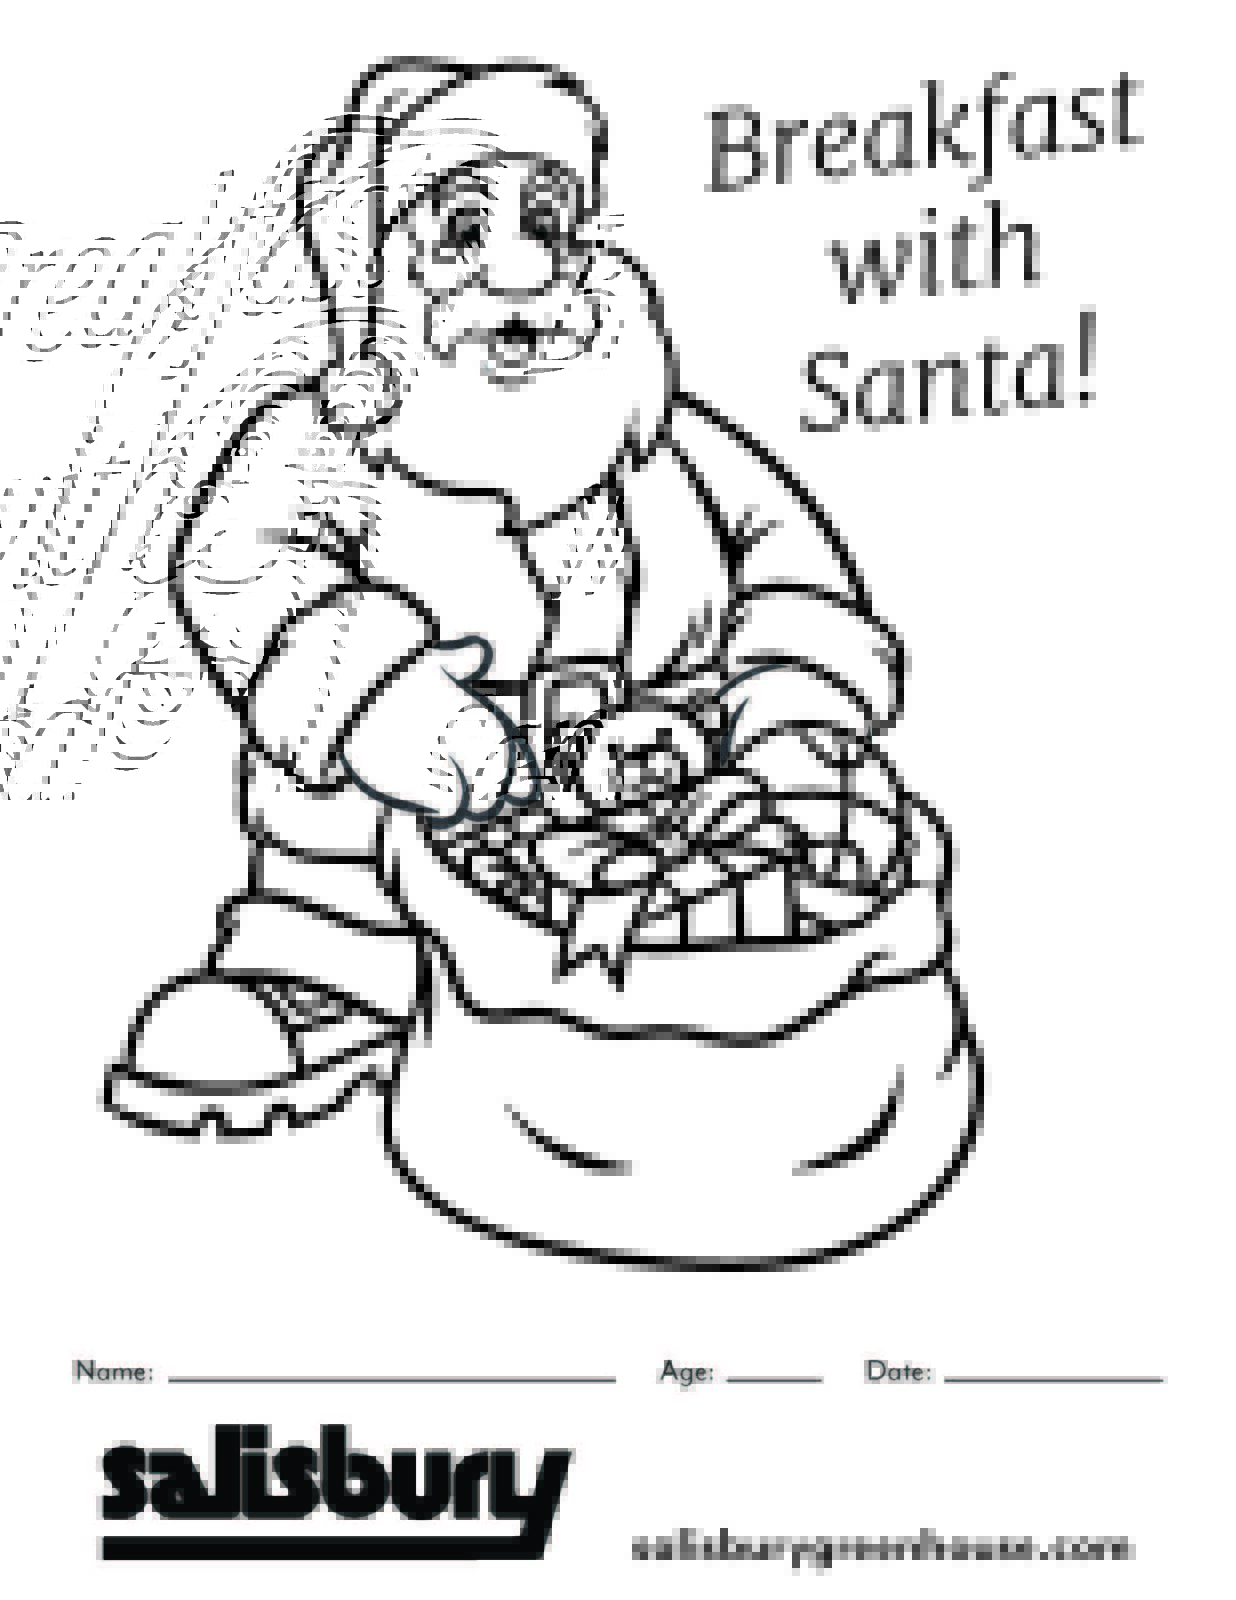 Santa with bag full of toys | Salisbury Greenhouse - St. Albert, Sherwood Park